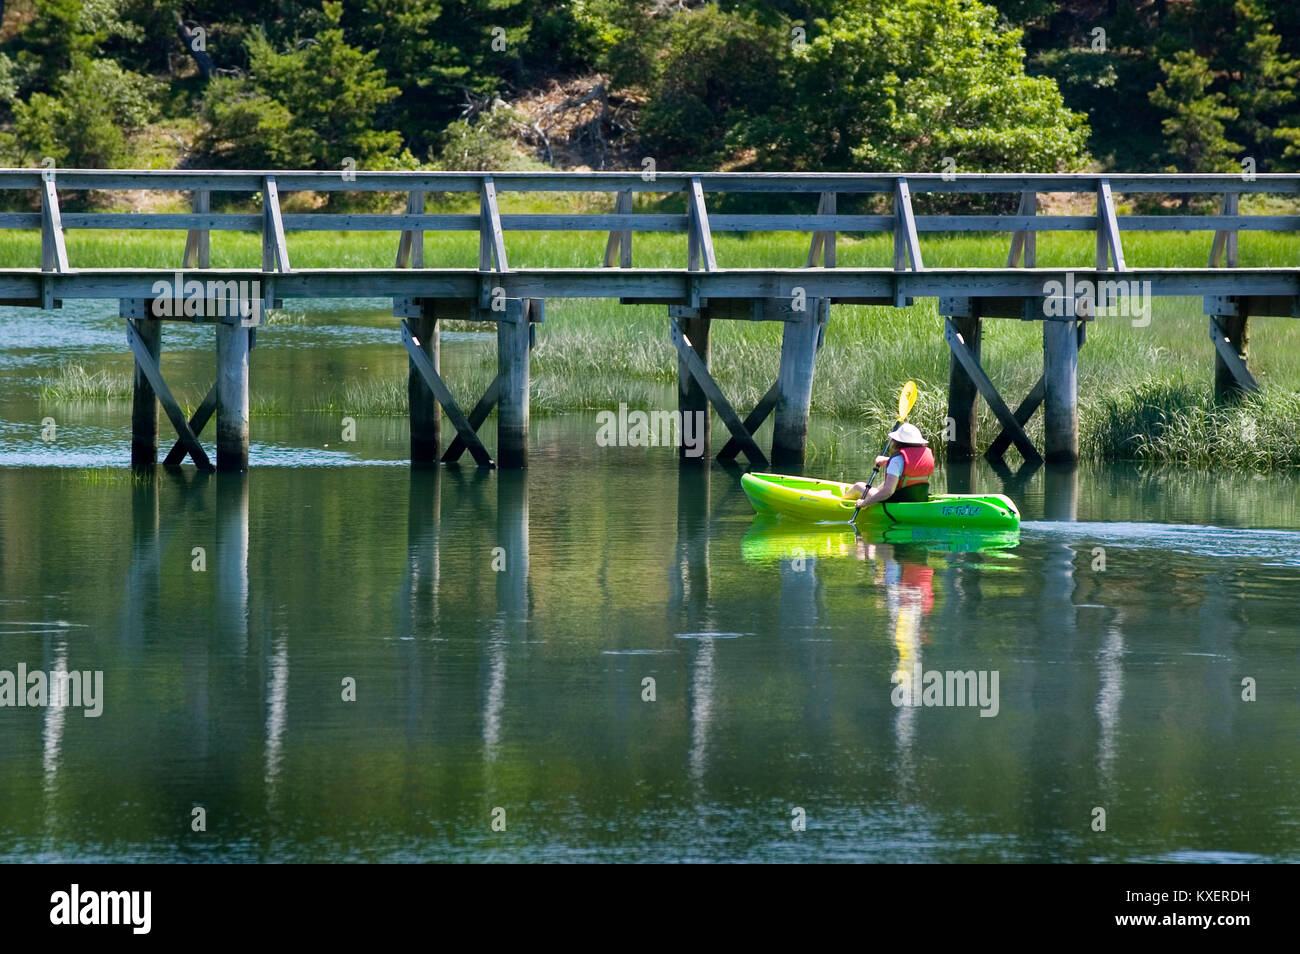 Un Kayakista a punto de pasar bajo el puente cerca del Tío Tim Wellfleet Center en el pantano. Cape Cod, Massachusetts, EE.UU. Foto de stock